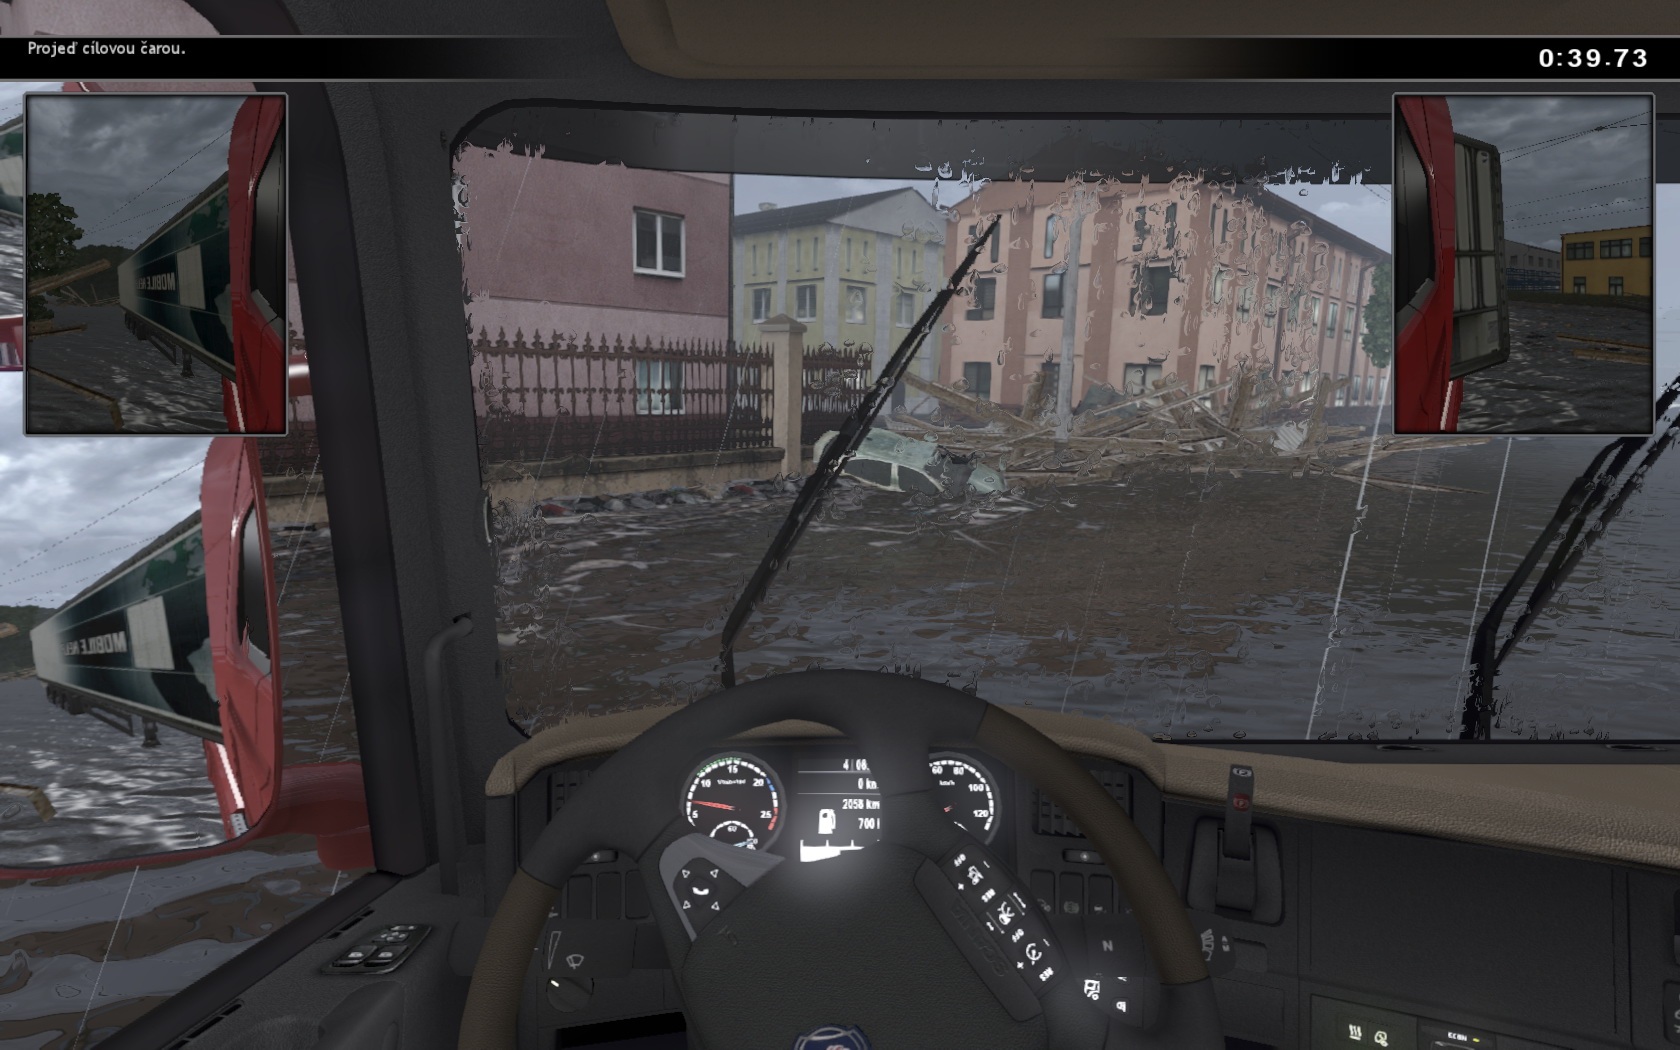 Scania Truck Simulator Pr, pr, len sa leje, pre Scaniu povode problm nie je.